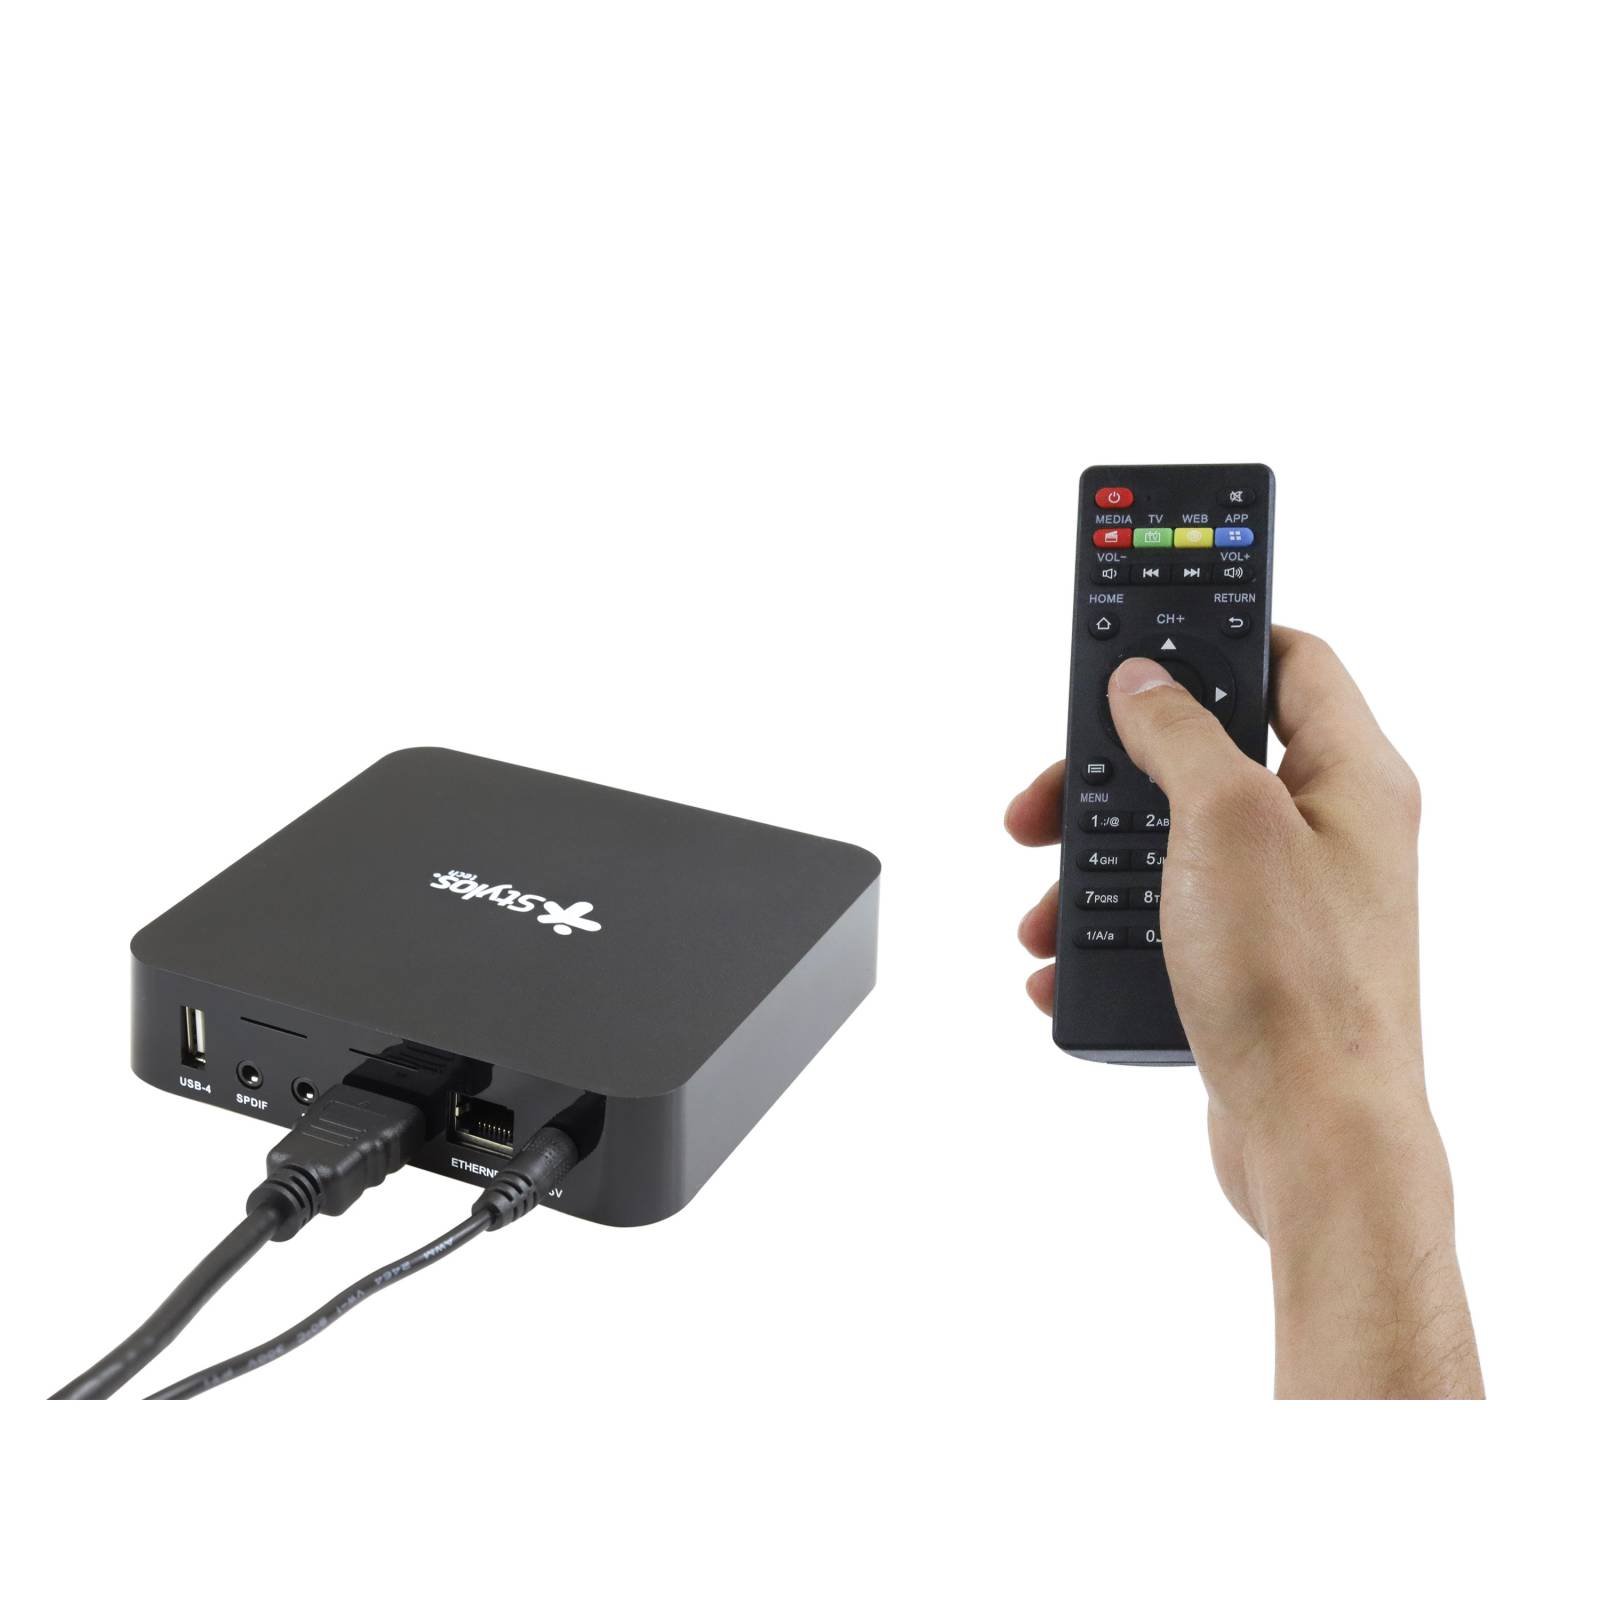 Convertidor Smart Tv Box 4K Stylos Tech, Procesador Quad-Core, 2Gb Ram,  16GB Memoria Interna, Wi-Fi/Ethernet, 1 Hdmi, 2 USB, Control Remoto,  Android 10 » Bigcom